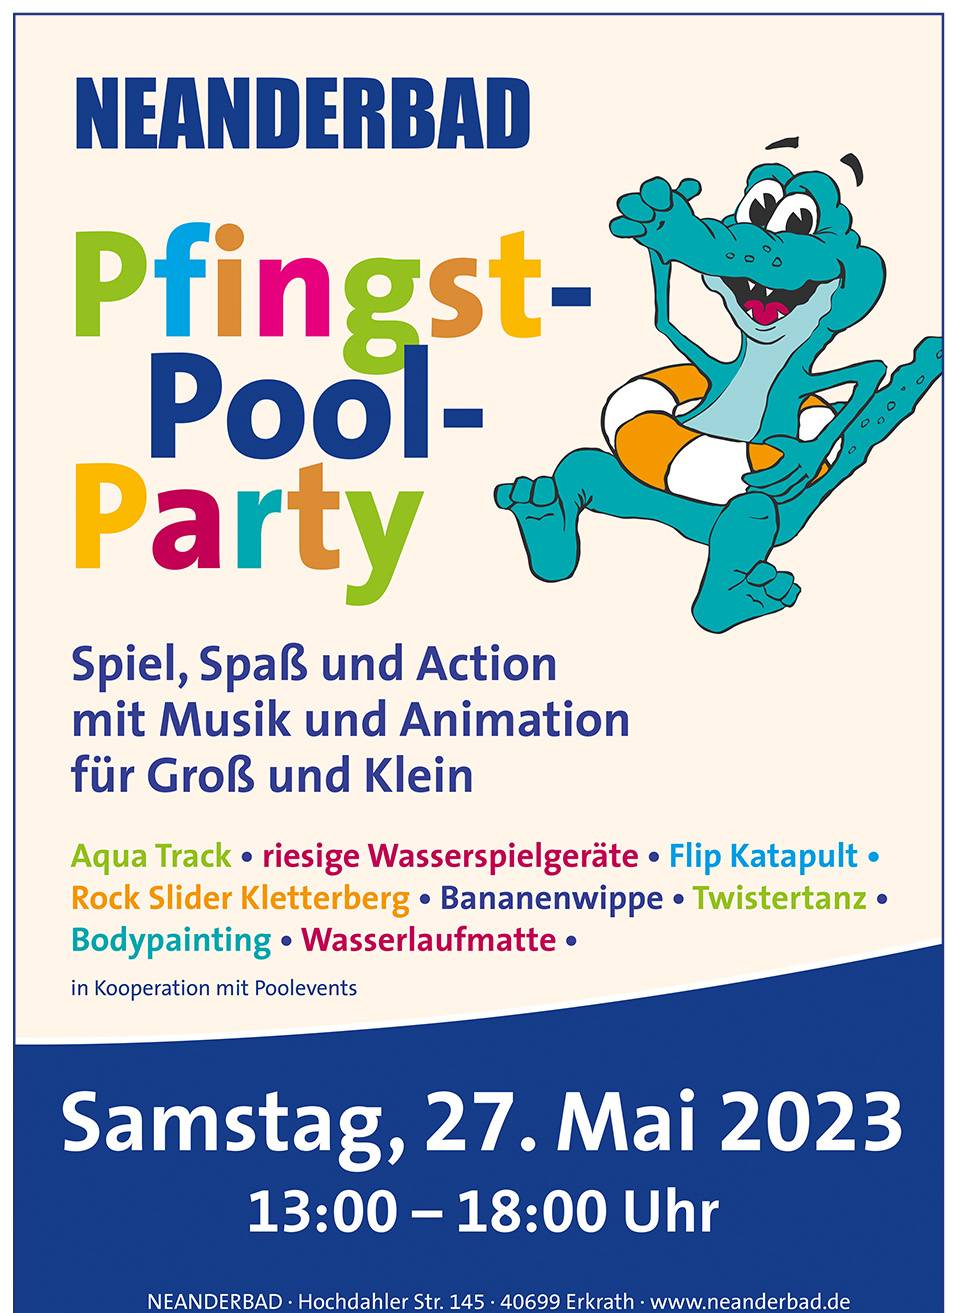 Pfingst-Pool-Party im Neanderbad am 27. Mai